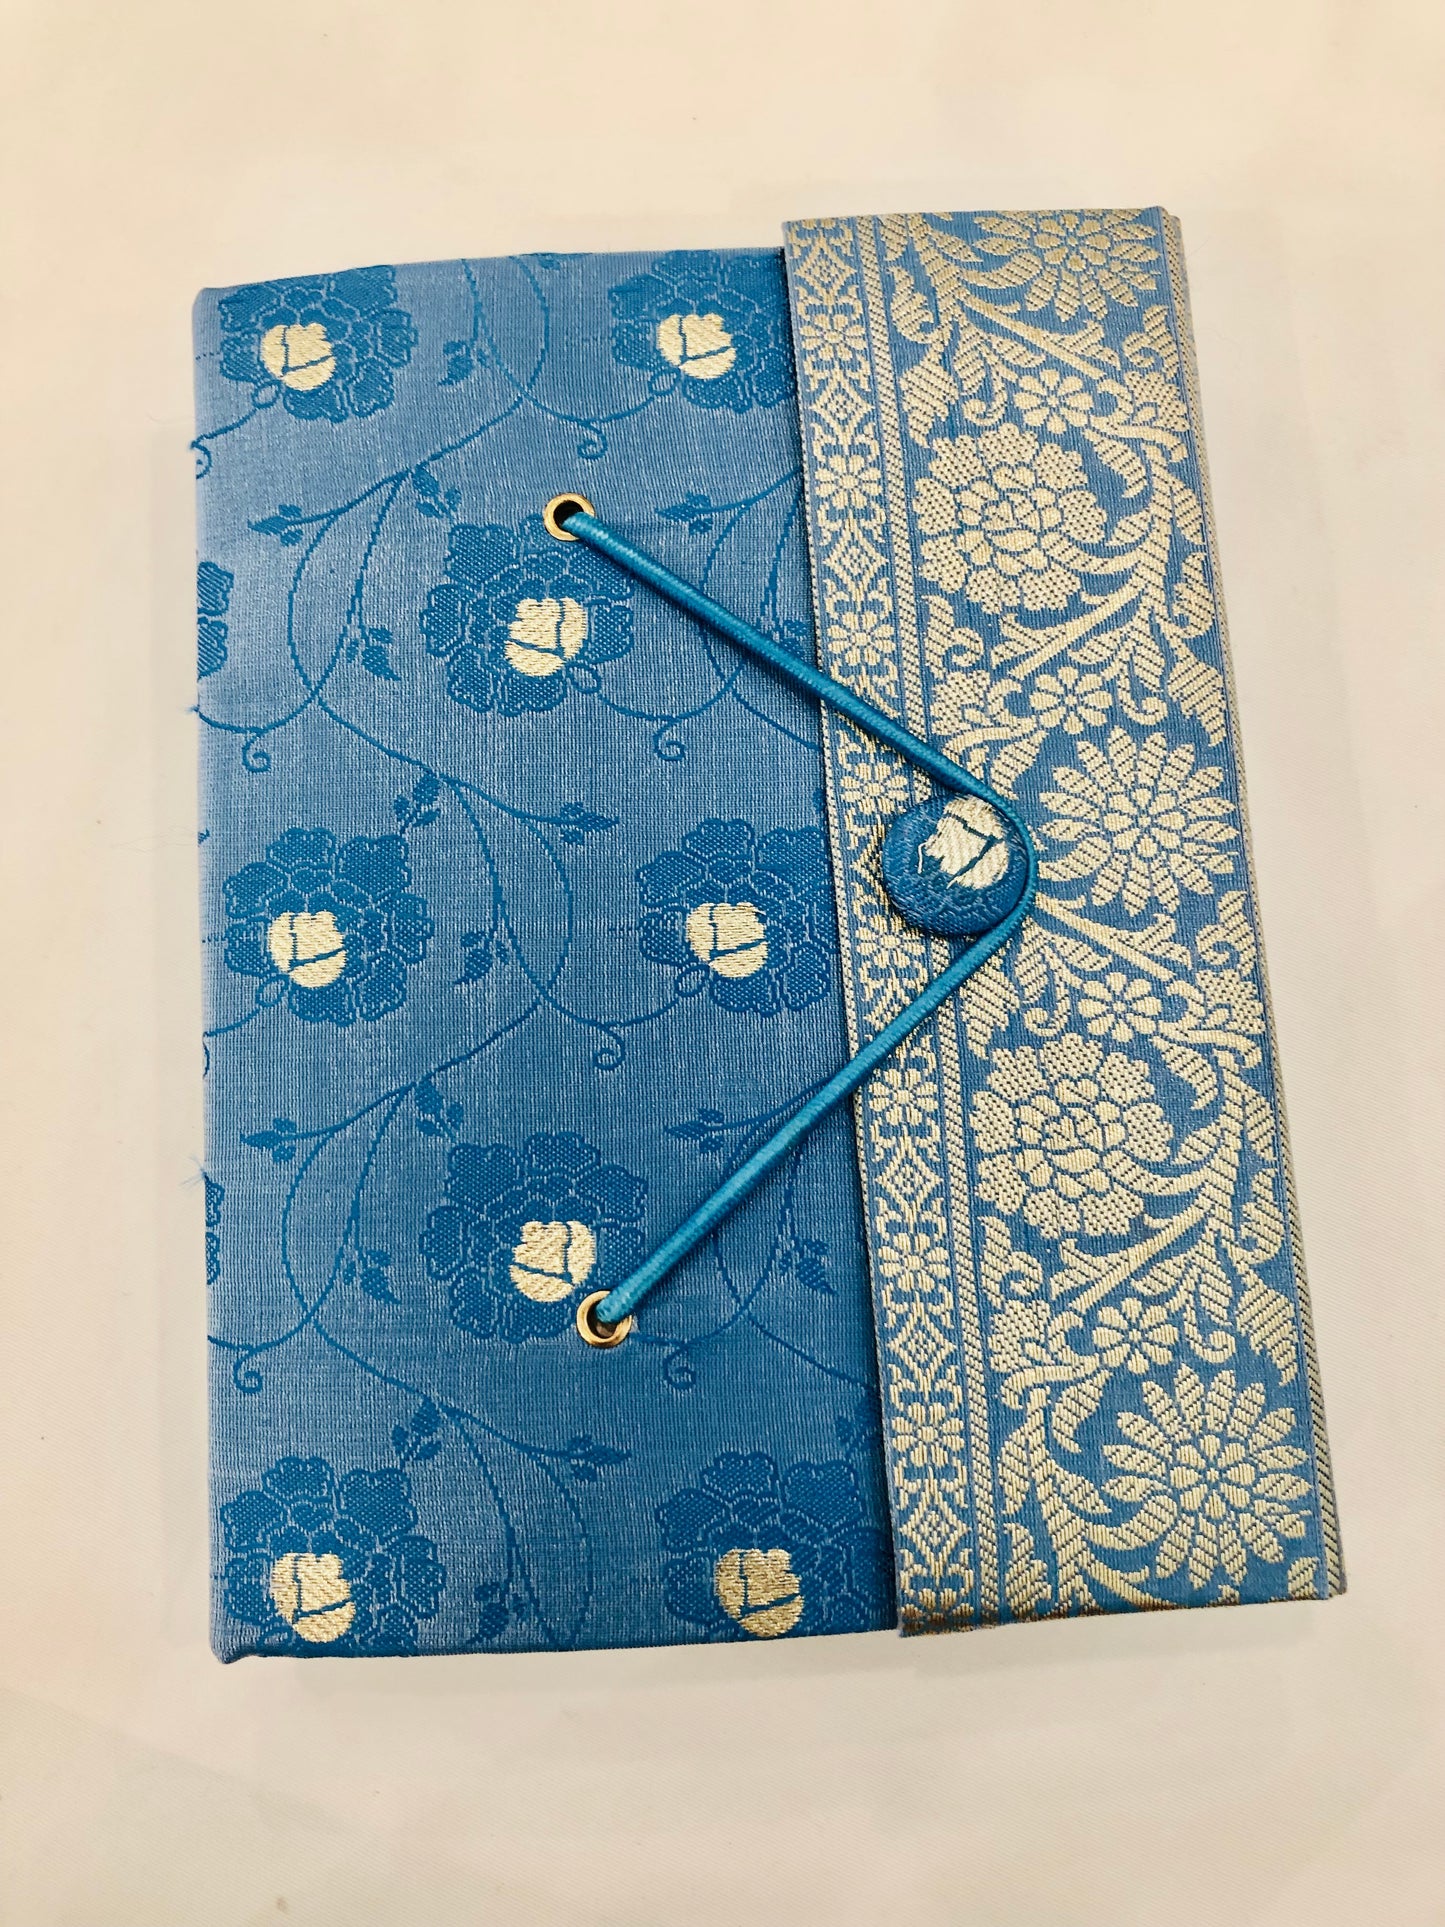 Handmade Sari Journal, Blue, Large